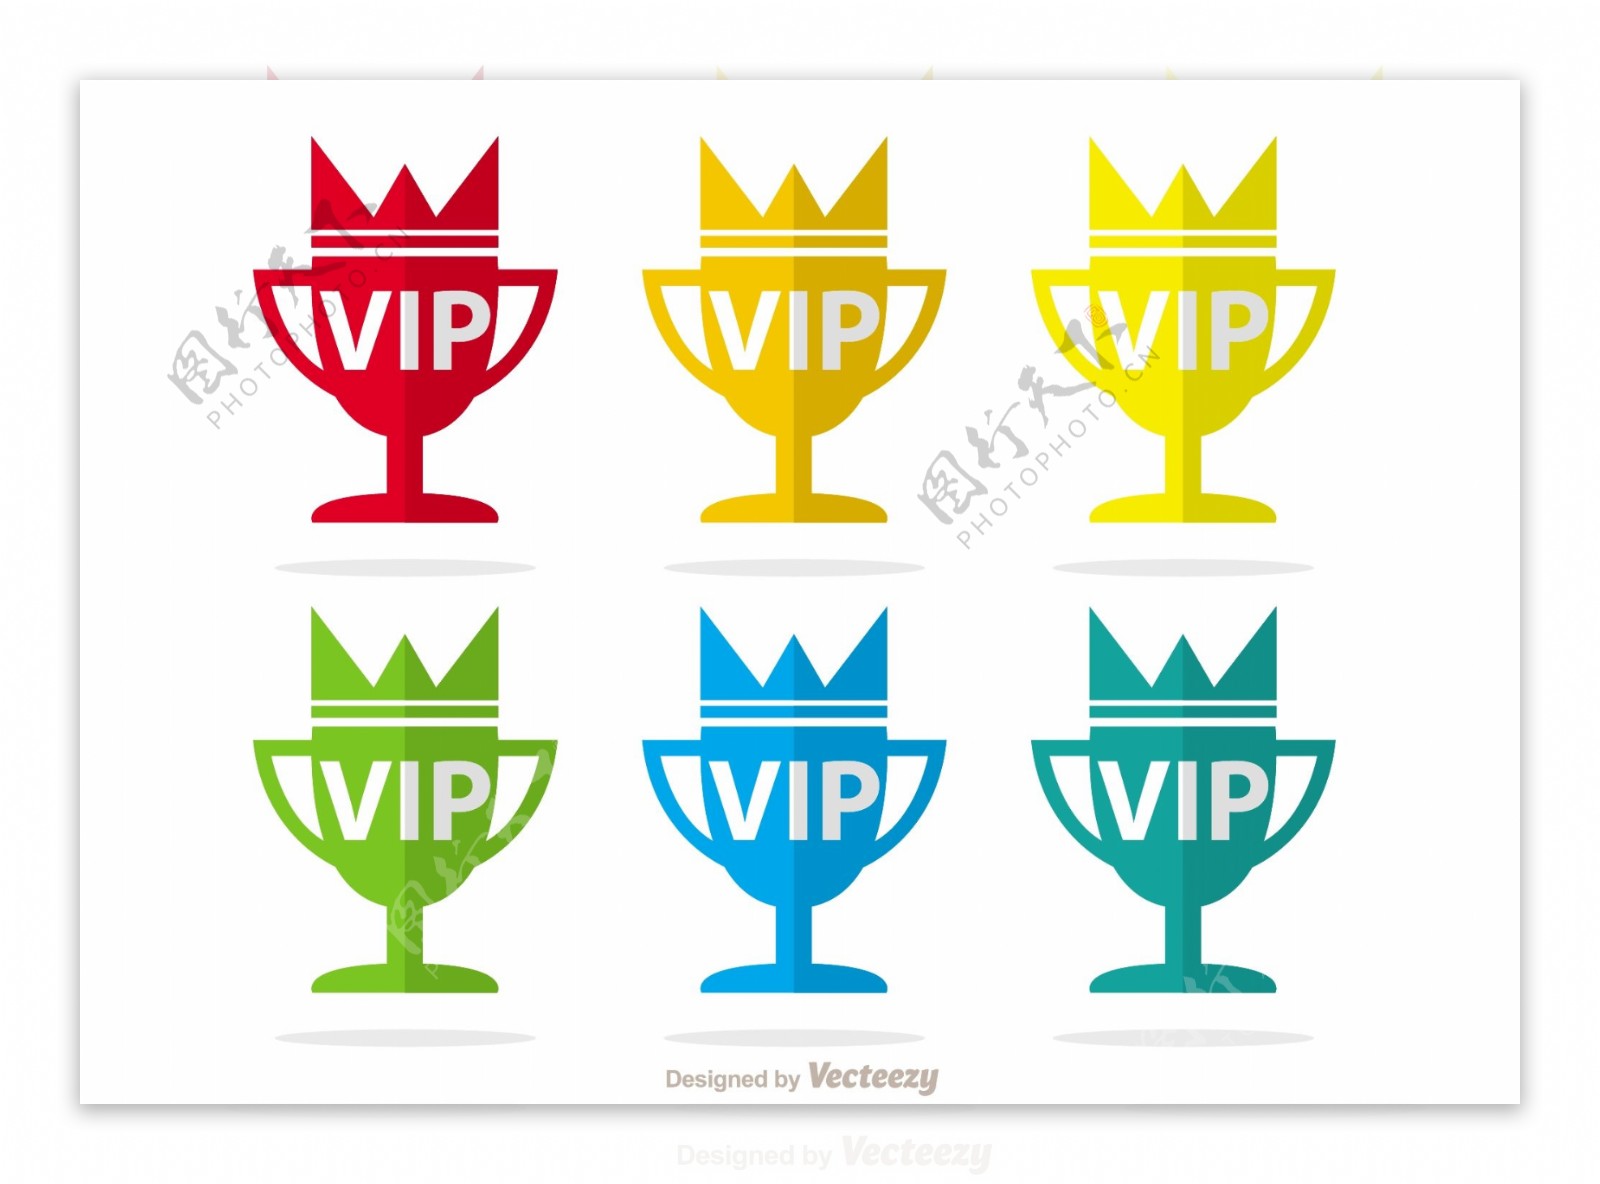 VIP徽章图标